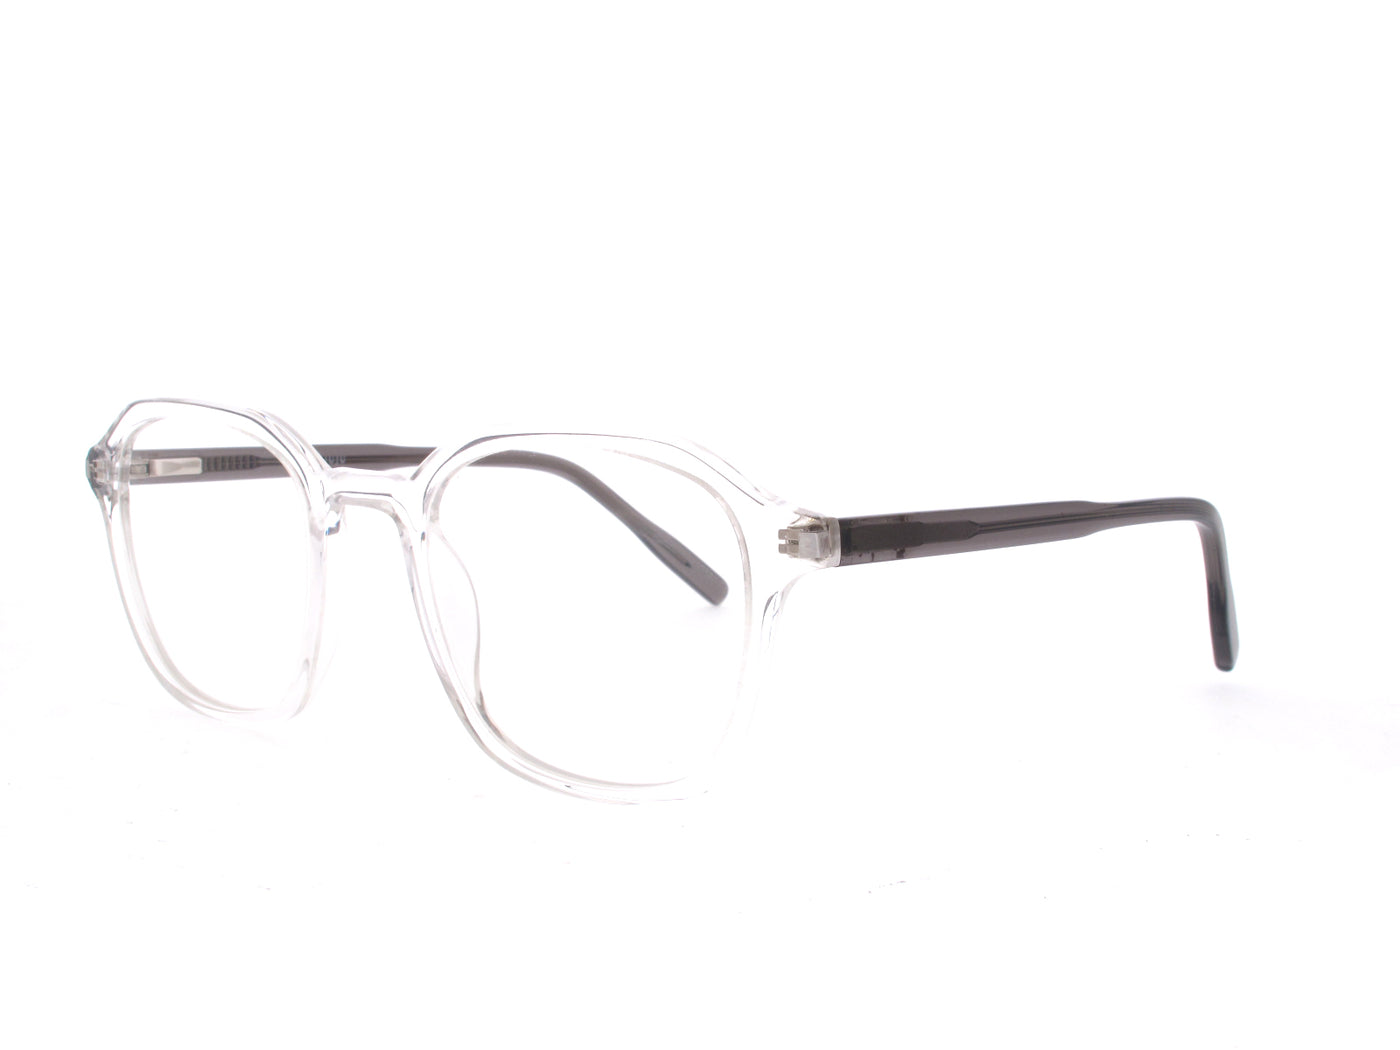 Square Glasses 583058